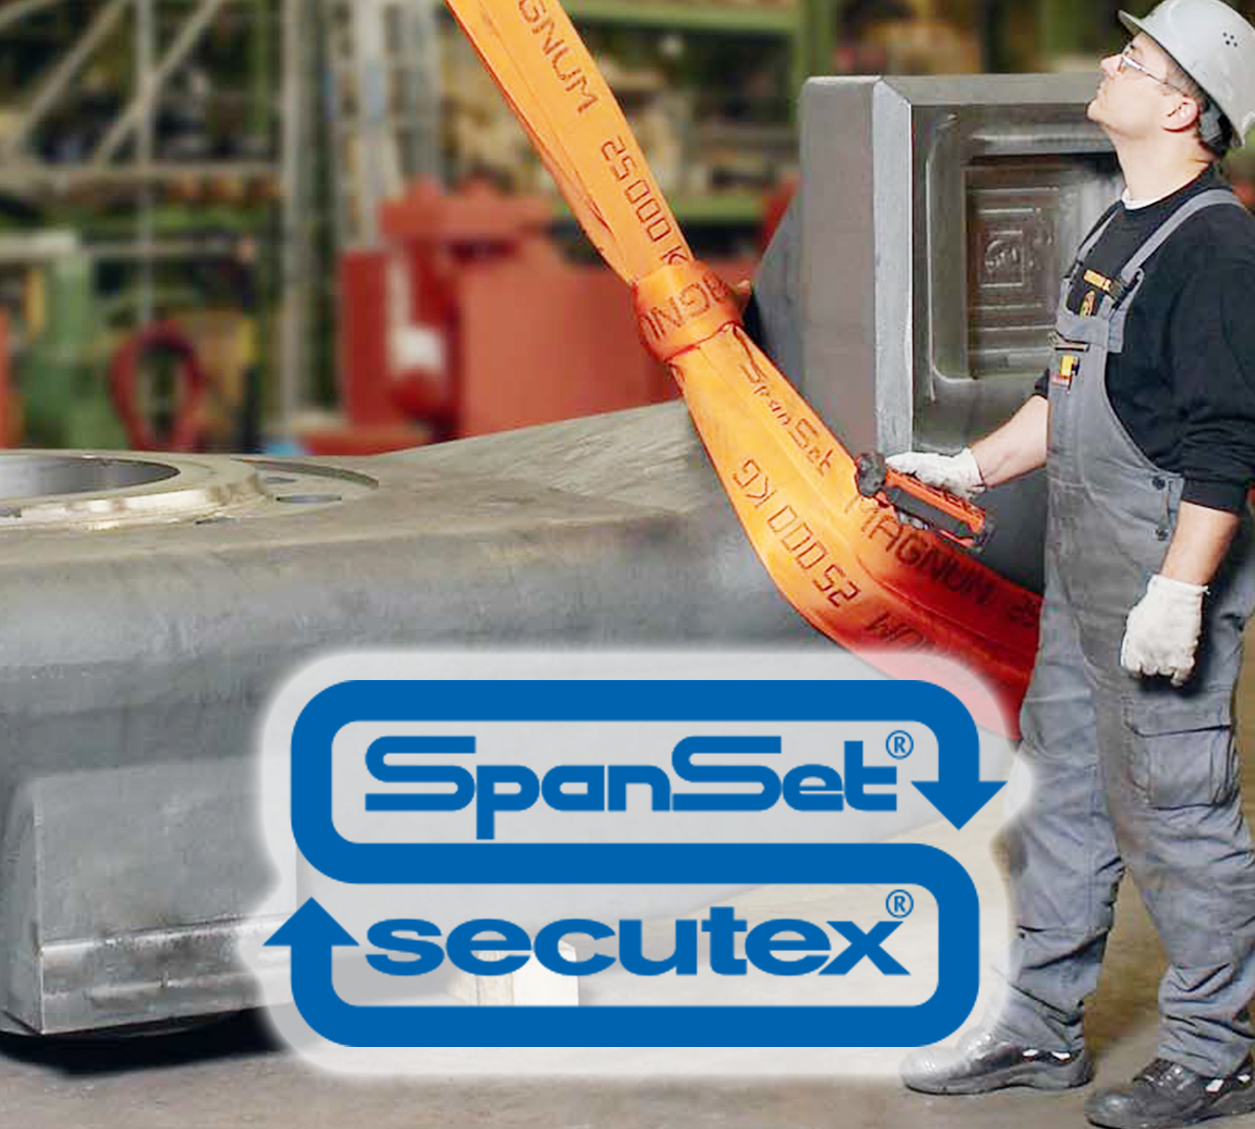 Spanset-Secutex